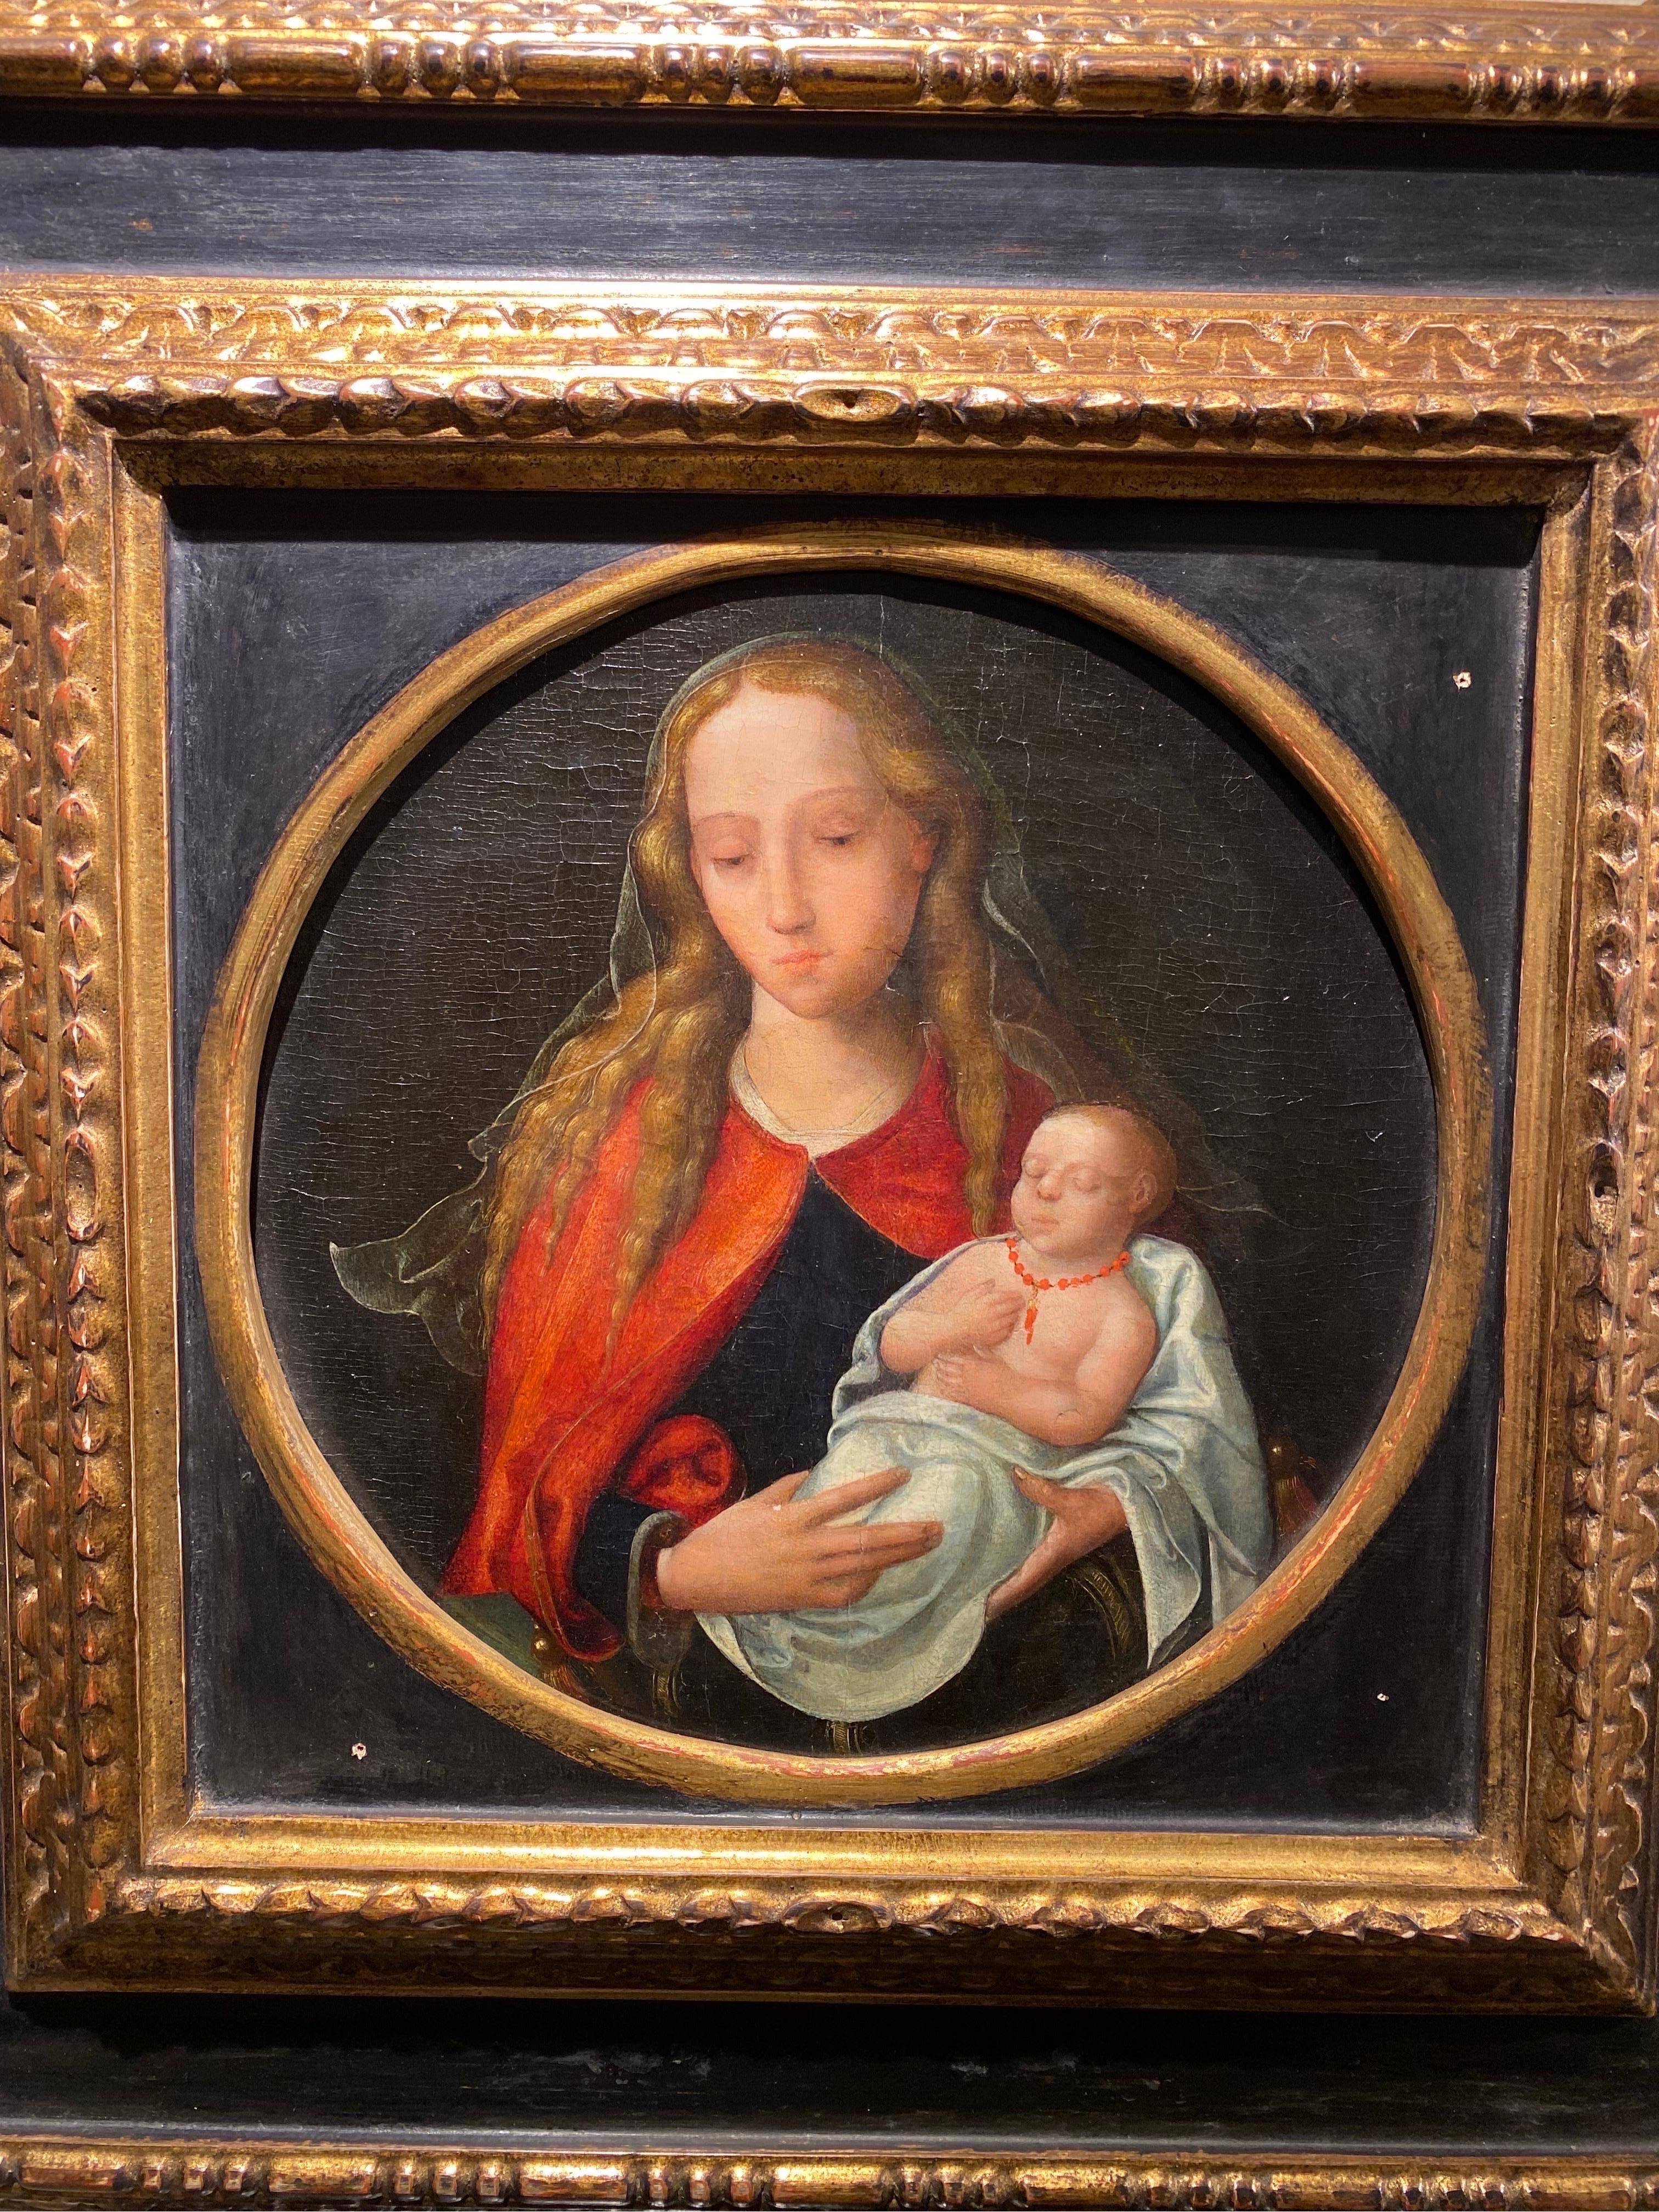 Maestro de las medias figuras Portrait Painting - 16 century
Virgin and child